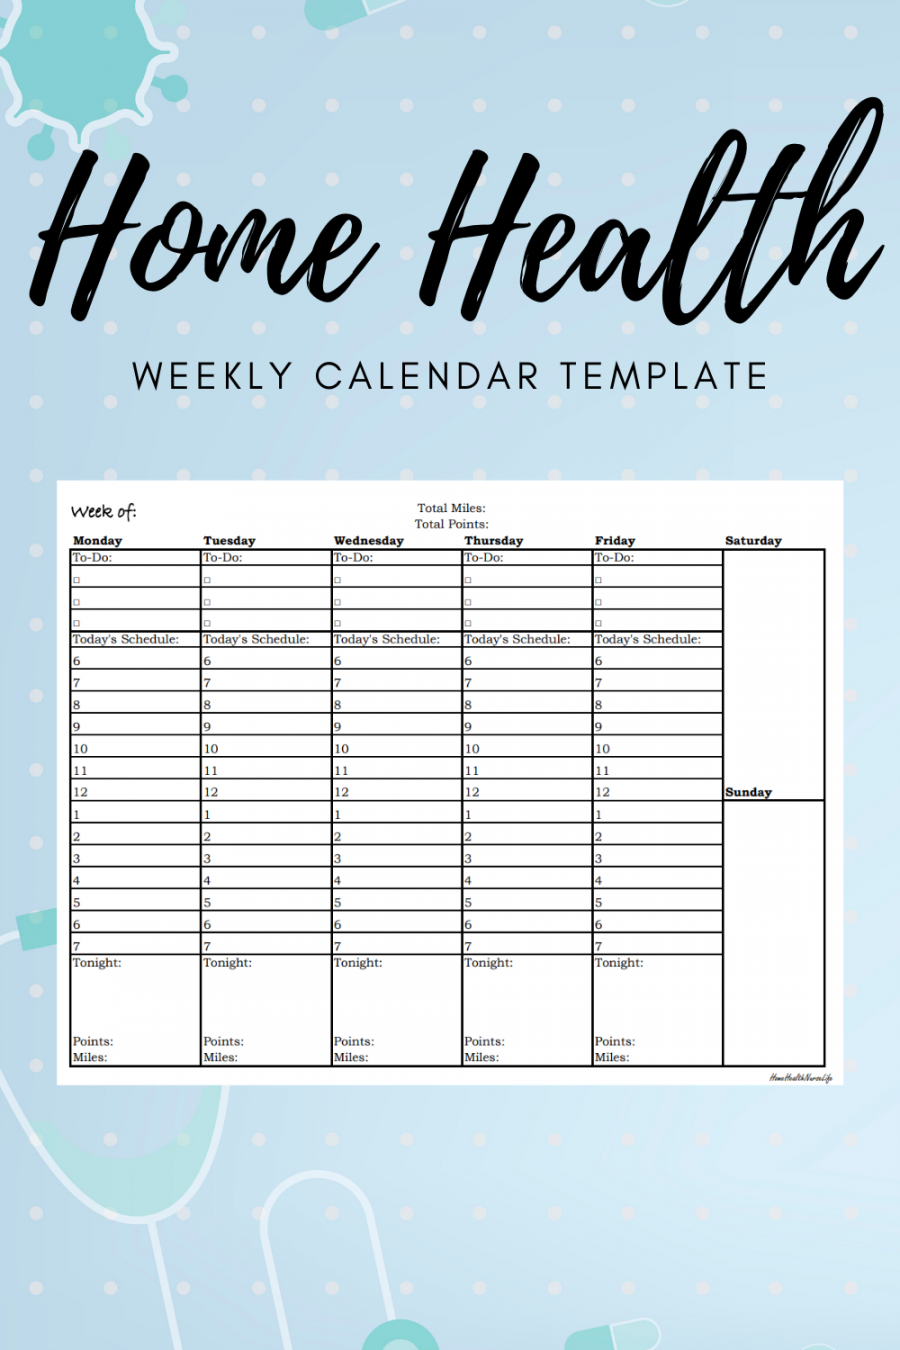 Home Health Nurse Weekly Calendar Template  Home health nurse